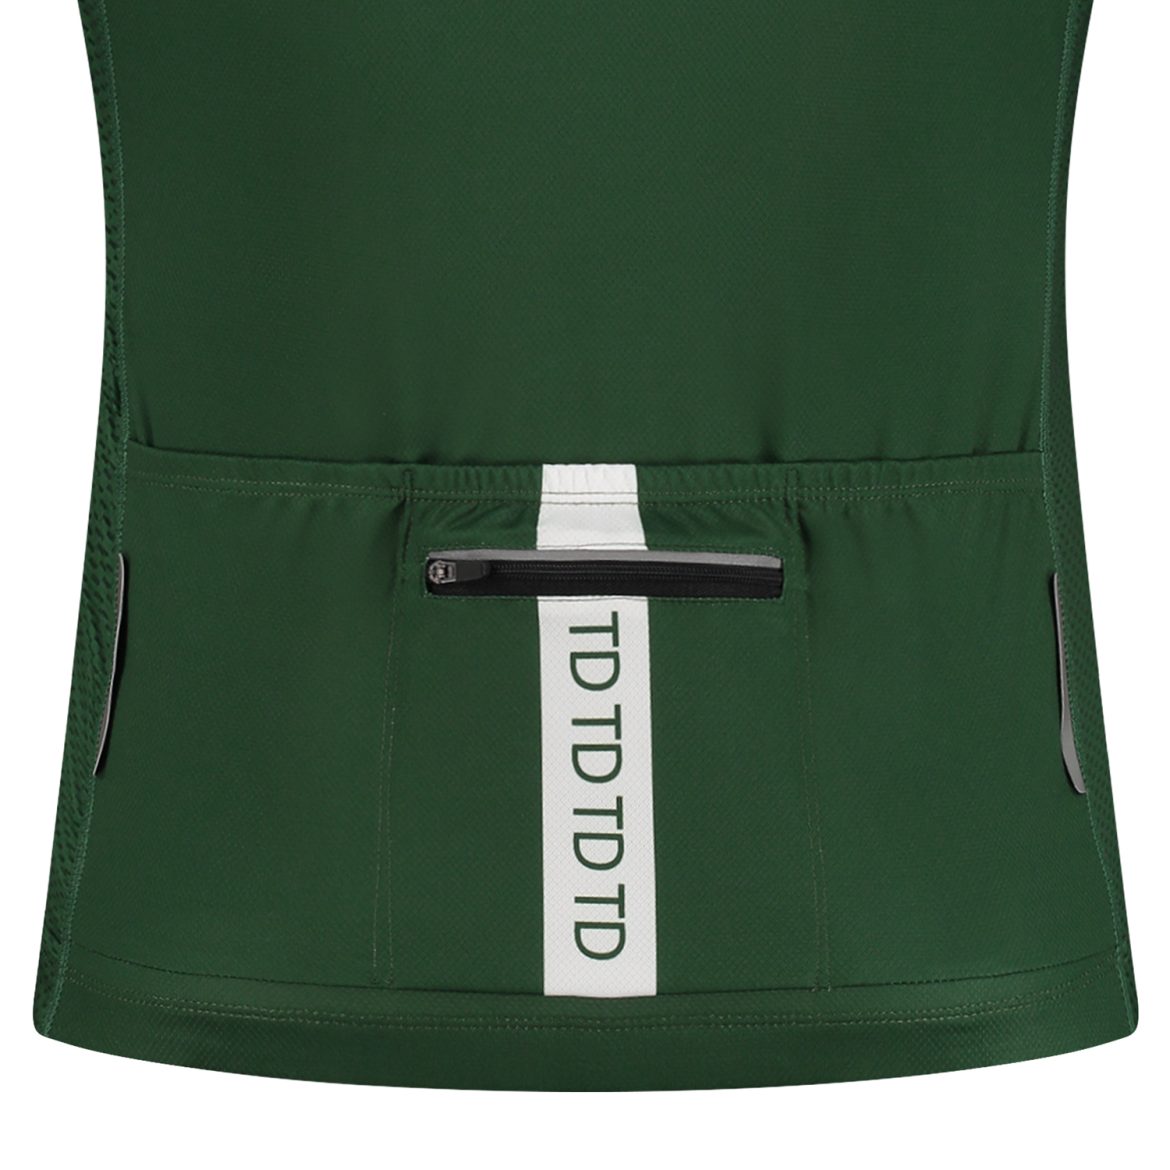 Detail photo of back pockets with zipper on dark green women's cycling jersey from TD Sportswear